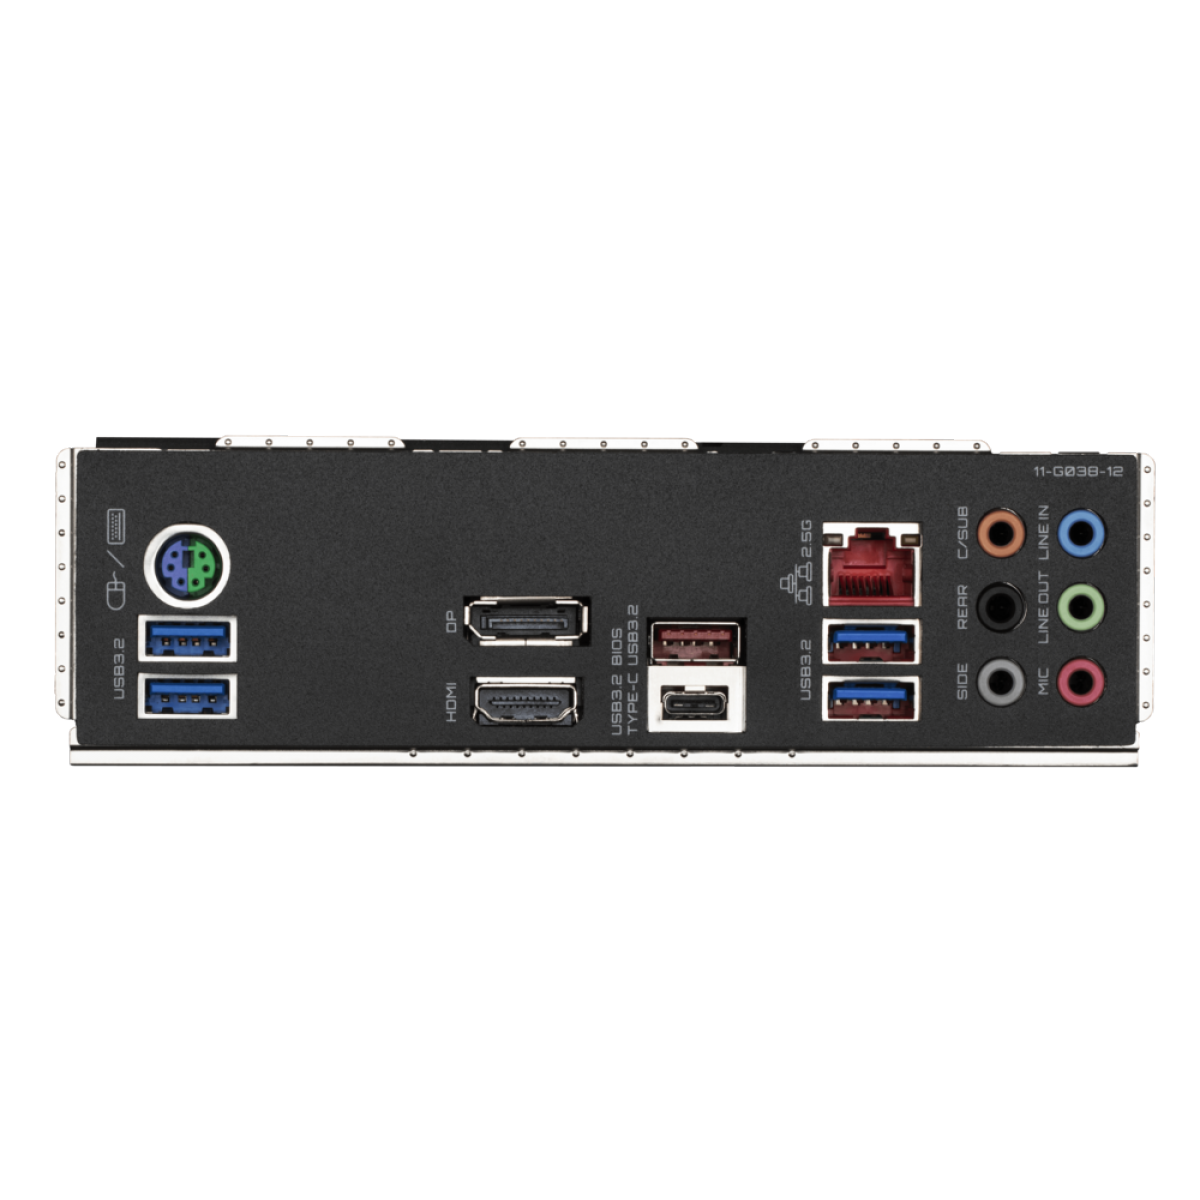 Placa Mãe Gigabyte Z590M Gaming X, Chipset Intel Z590 Express, Socket LGA 1200, mATX, DDR4  - Open Box